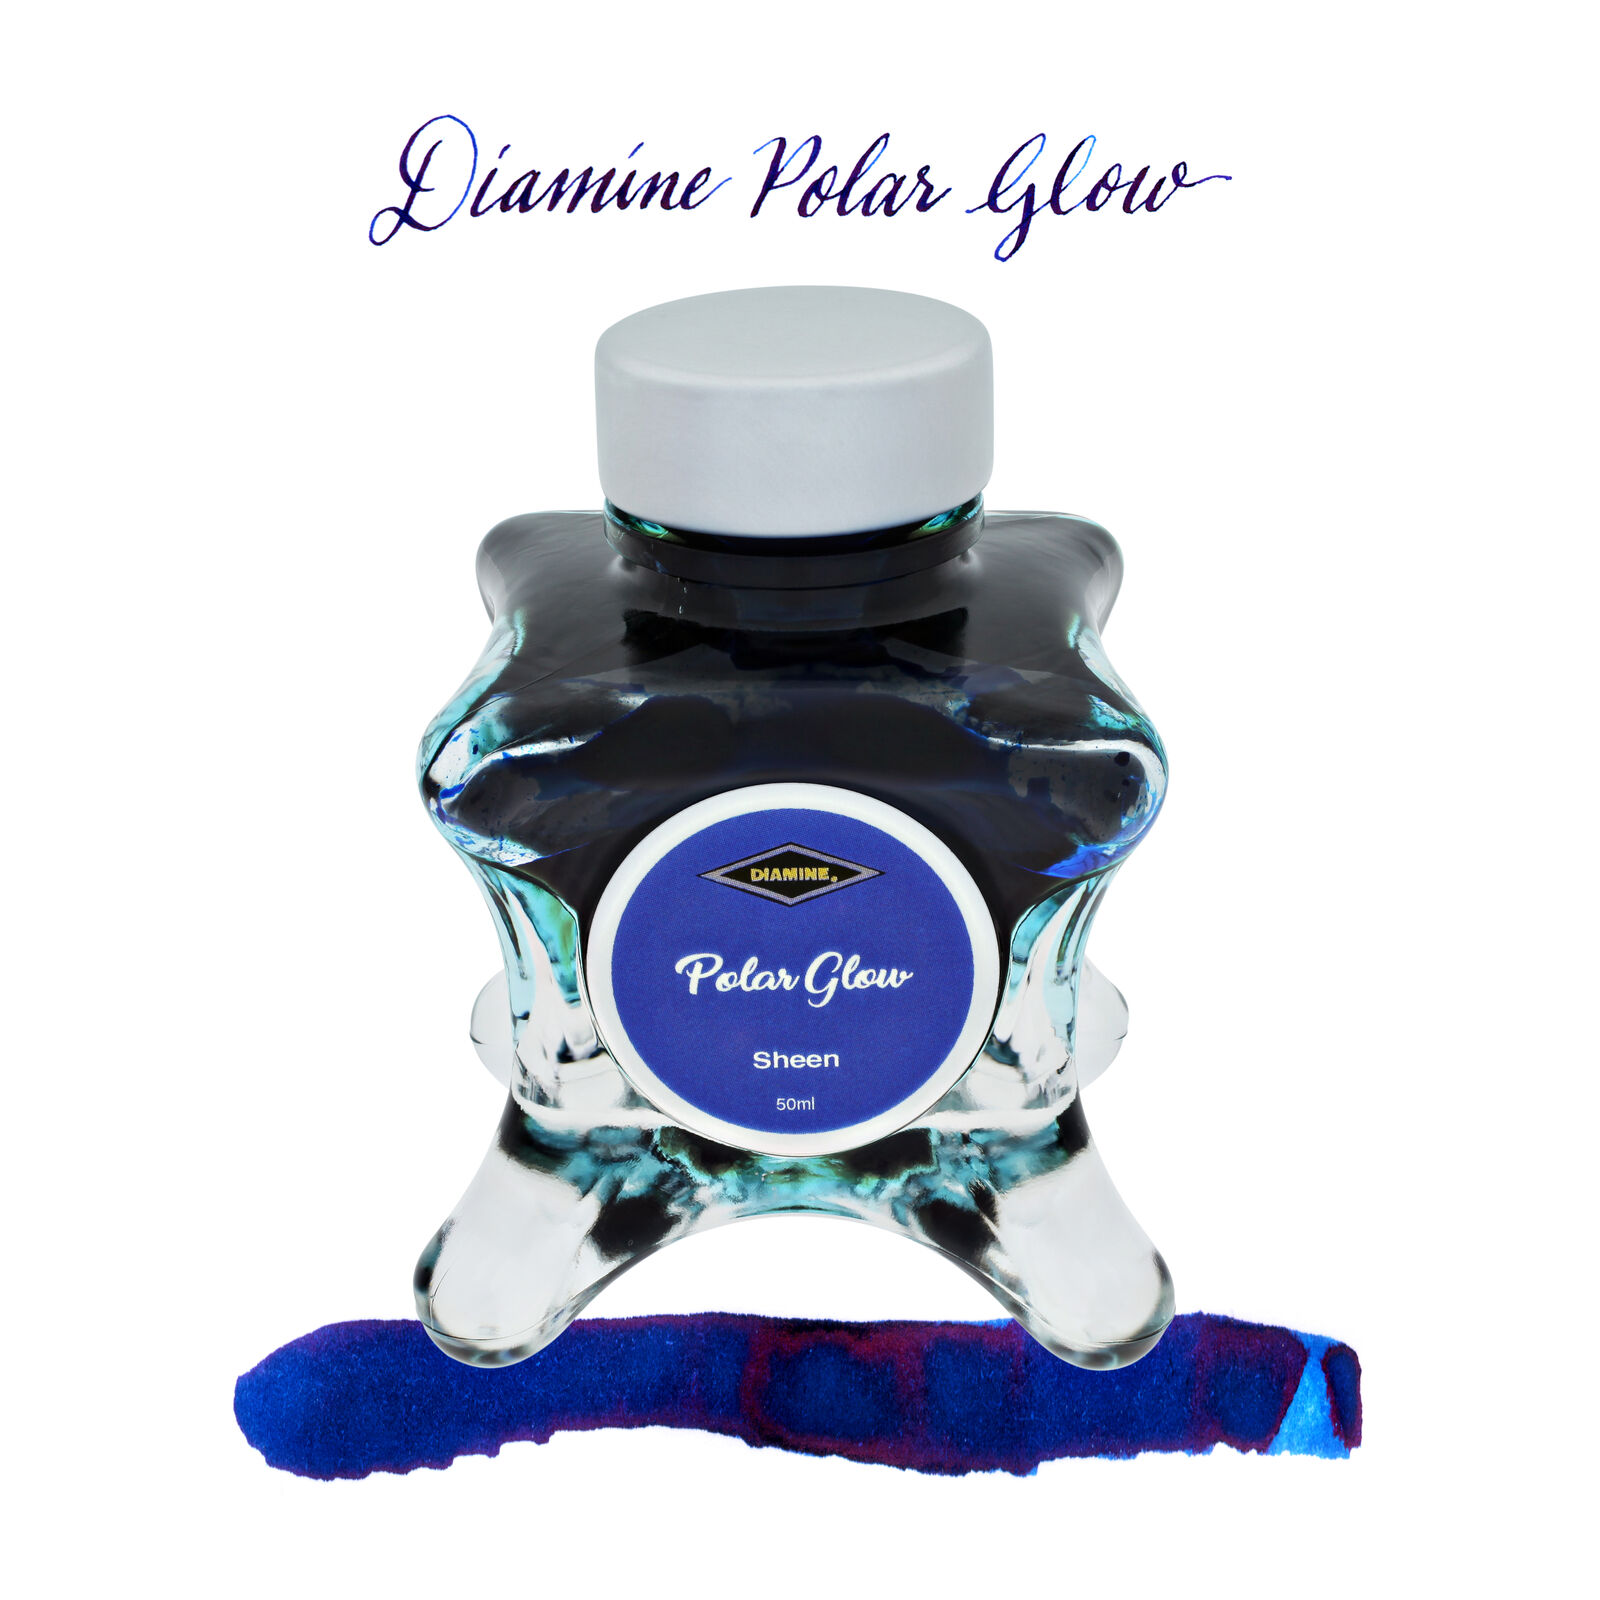 Diamine Inkvent Blue Edition Sheen Bottled Ink in Polar Glow - 50 mL NEW